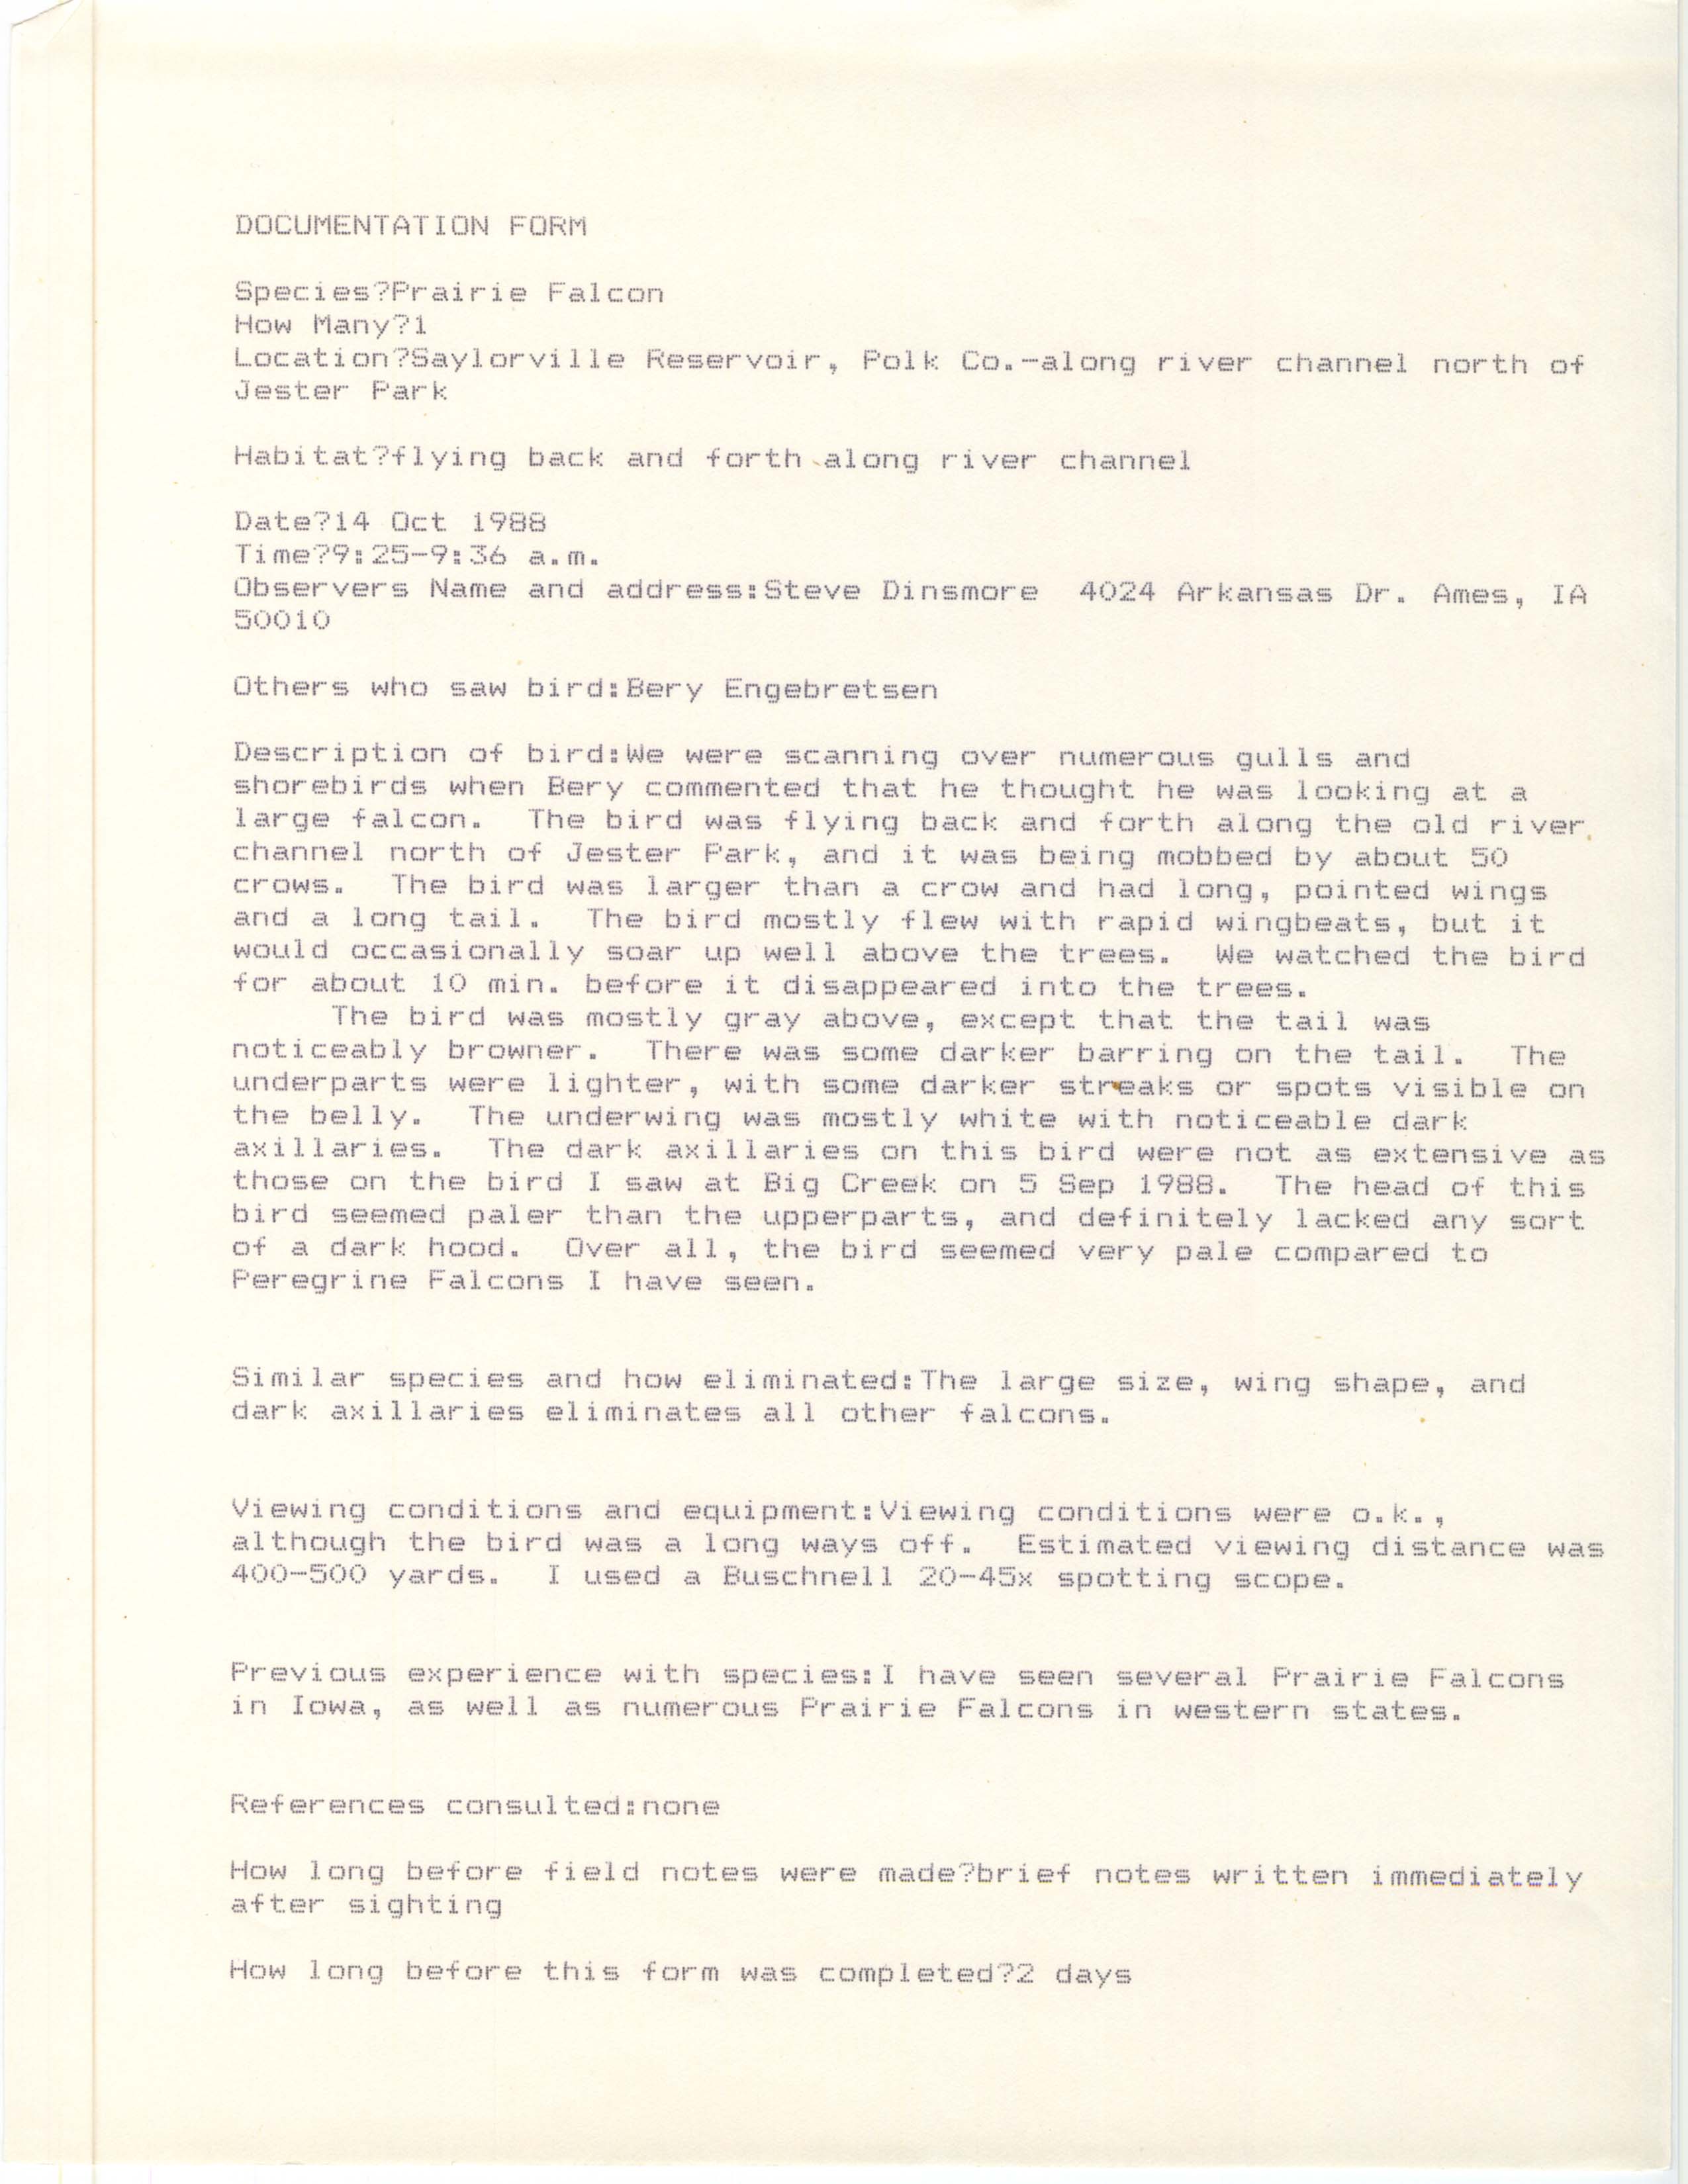 Rare bird documentation form for Prairie Falcon at Saylorville Reservoir, 1988